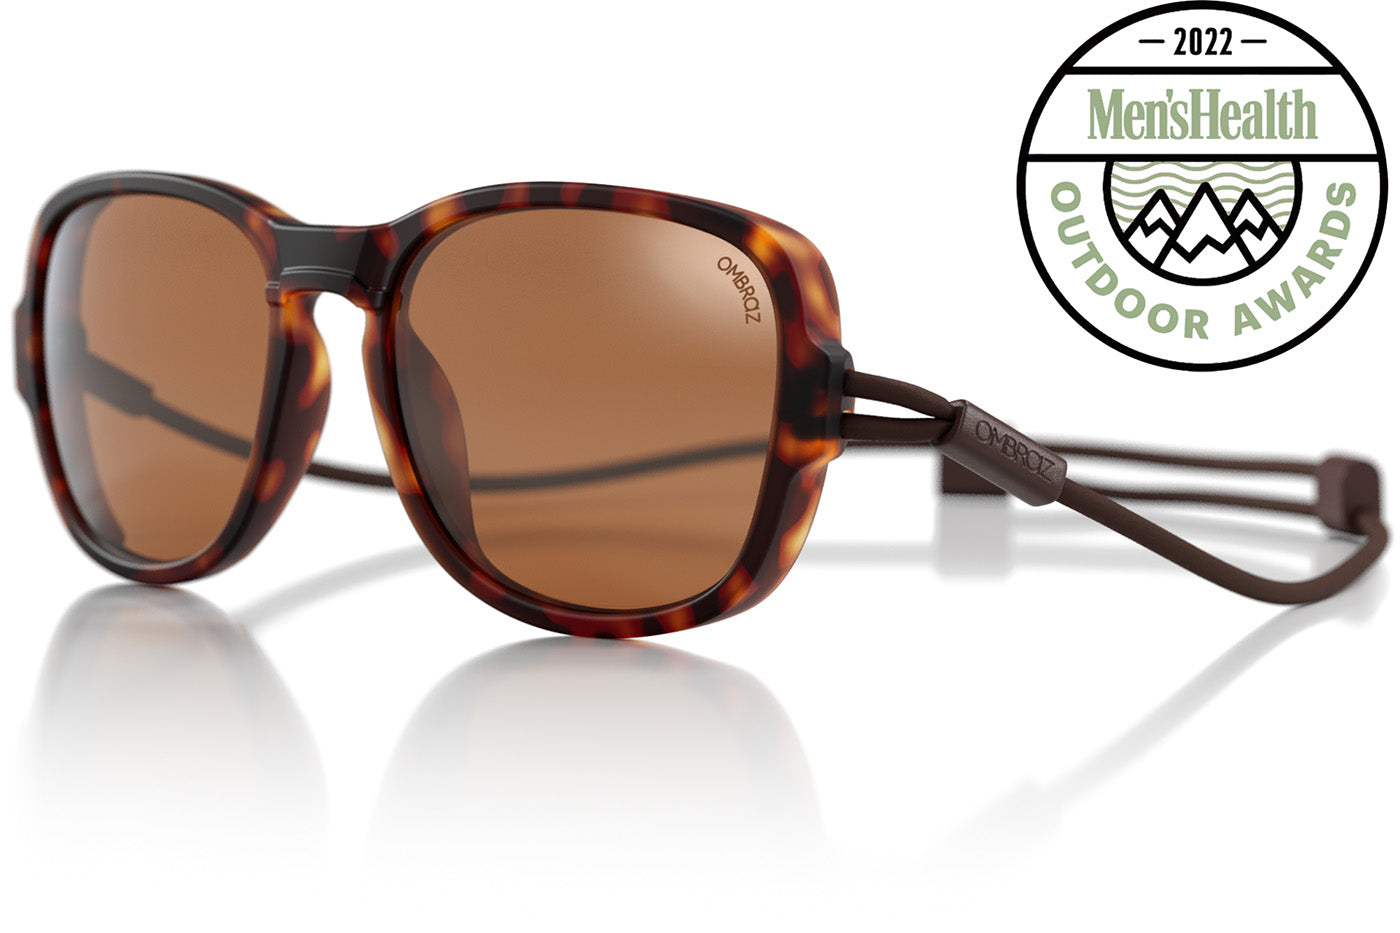 TETON_TORTOISE_BROWN Side angle of Ombraz tortoise teton sunglasses with strap